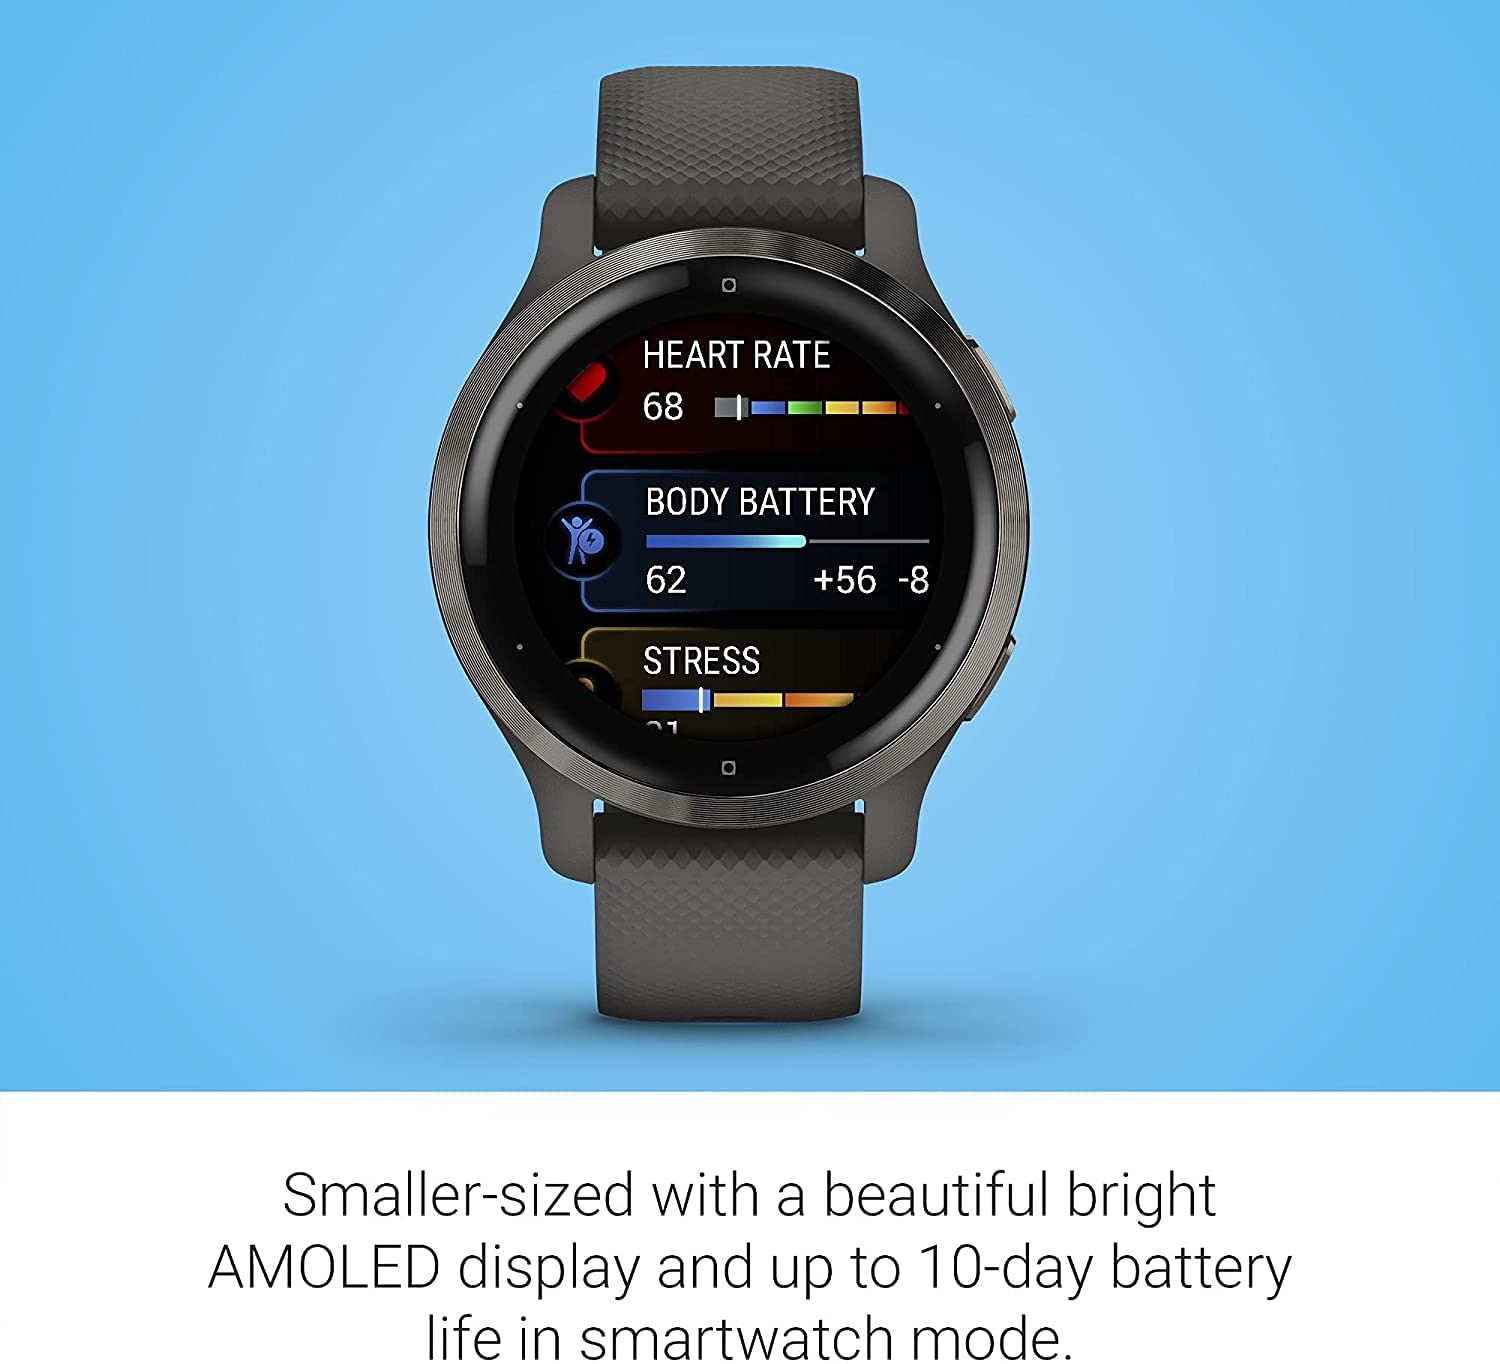 Garmin - Venu 2S Smartwatch ( Gray Slate )  